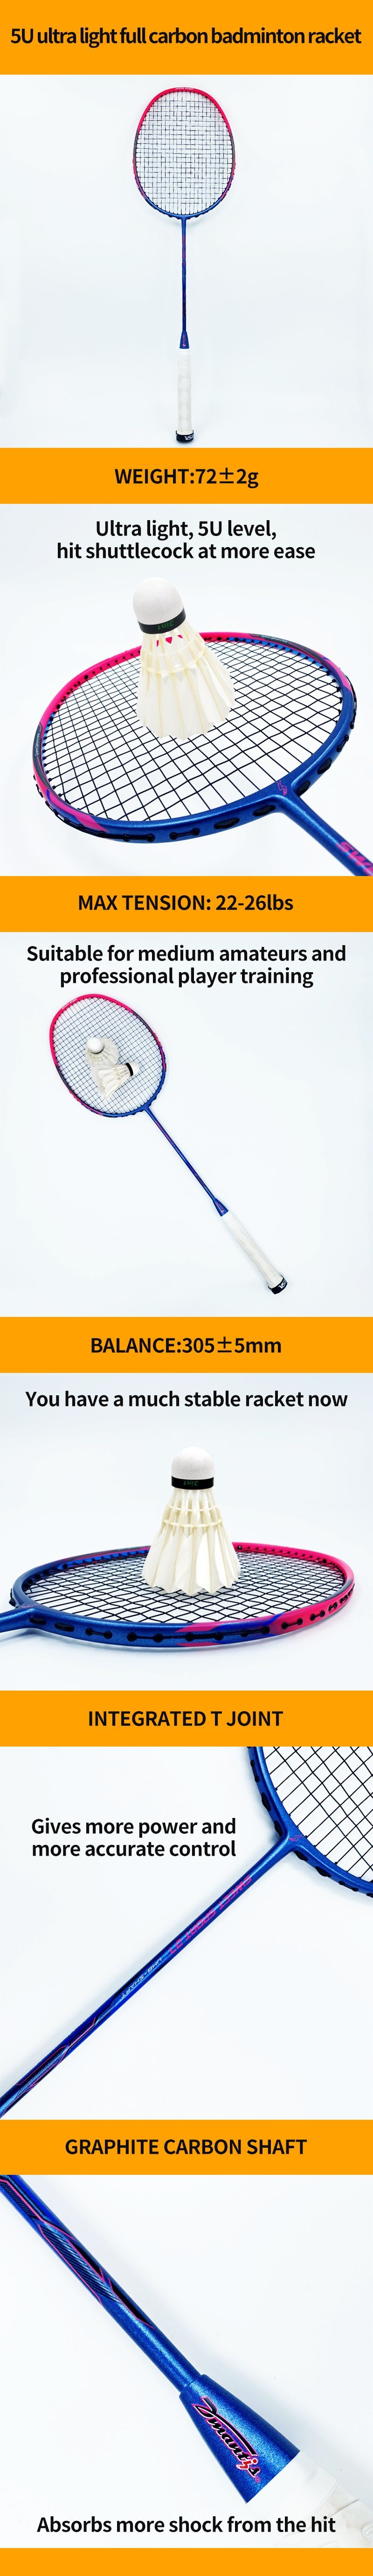 Hot Sale Professional Wholesaler Badminton Racket 100% Full Carbon Fiber Graphite